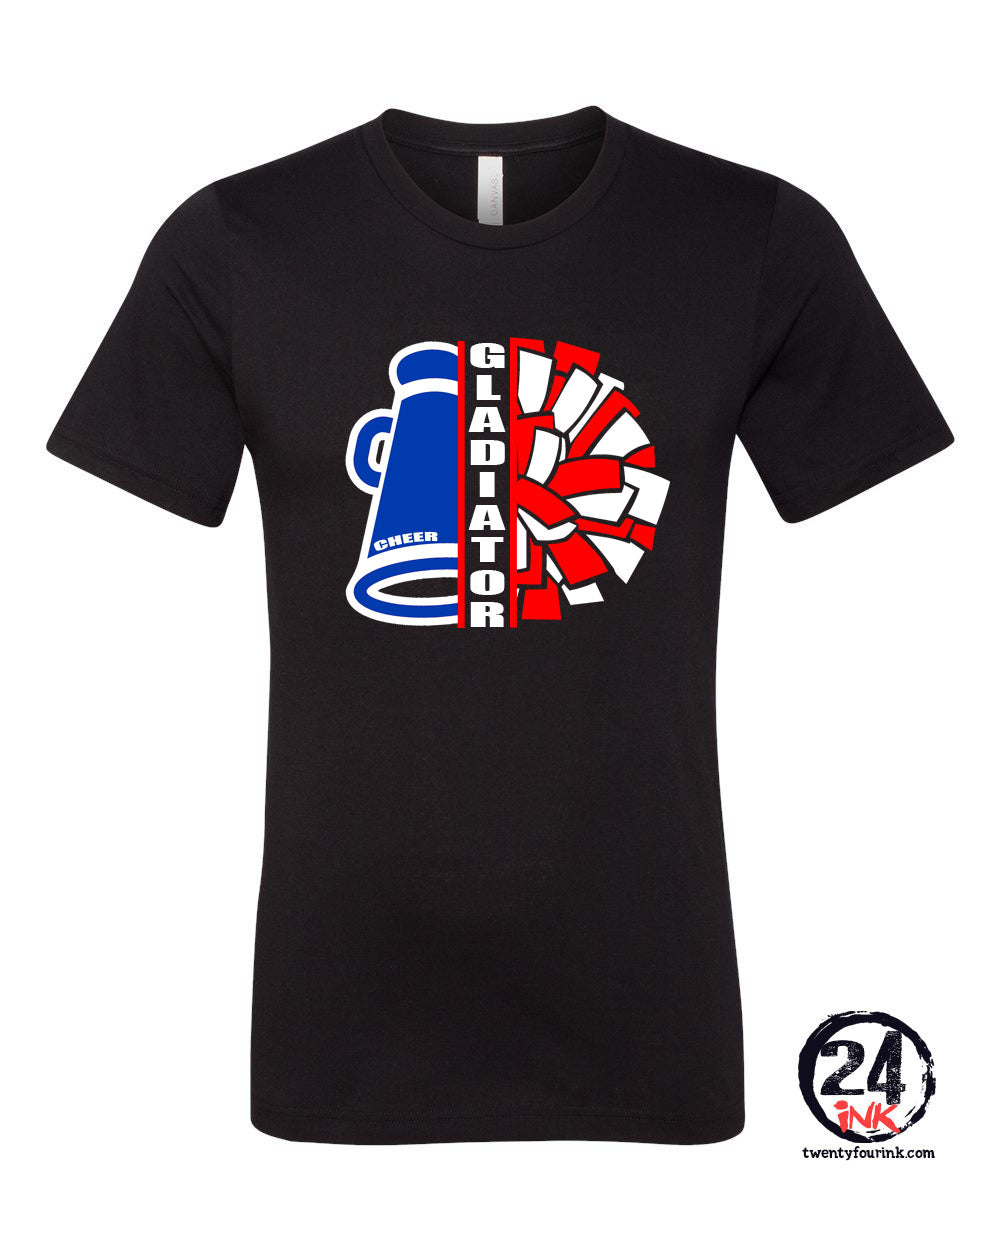 Goshen Cheer Design 10 T-Shirt